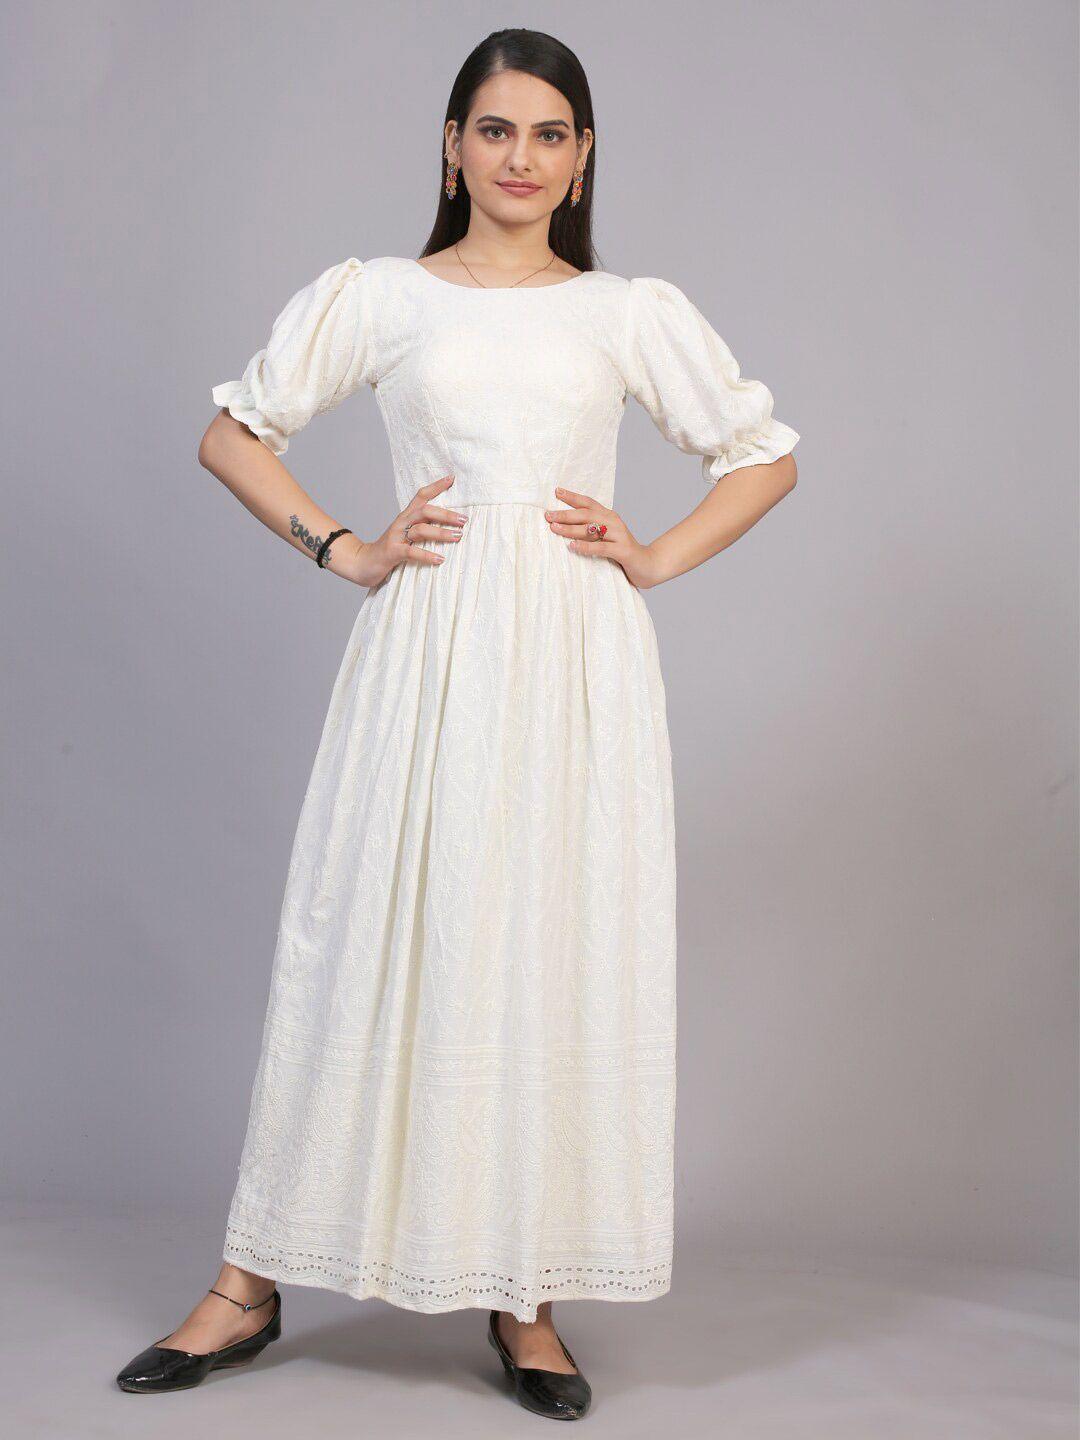 prenea off white floral embroidered maxi dress